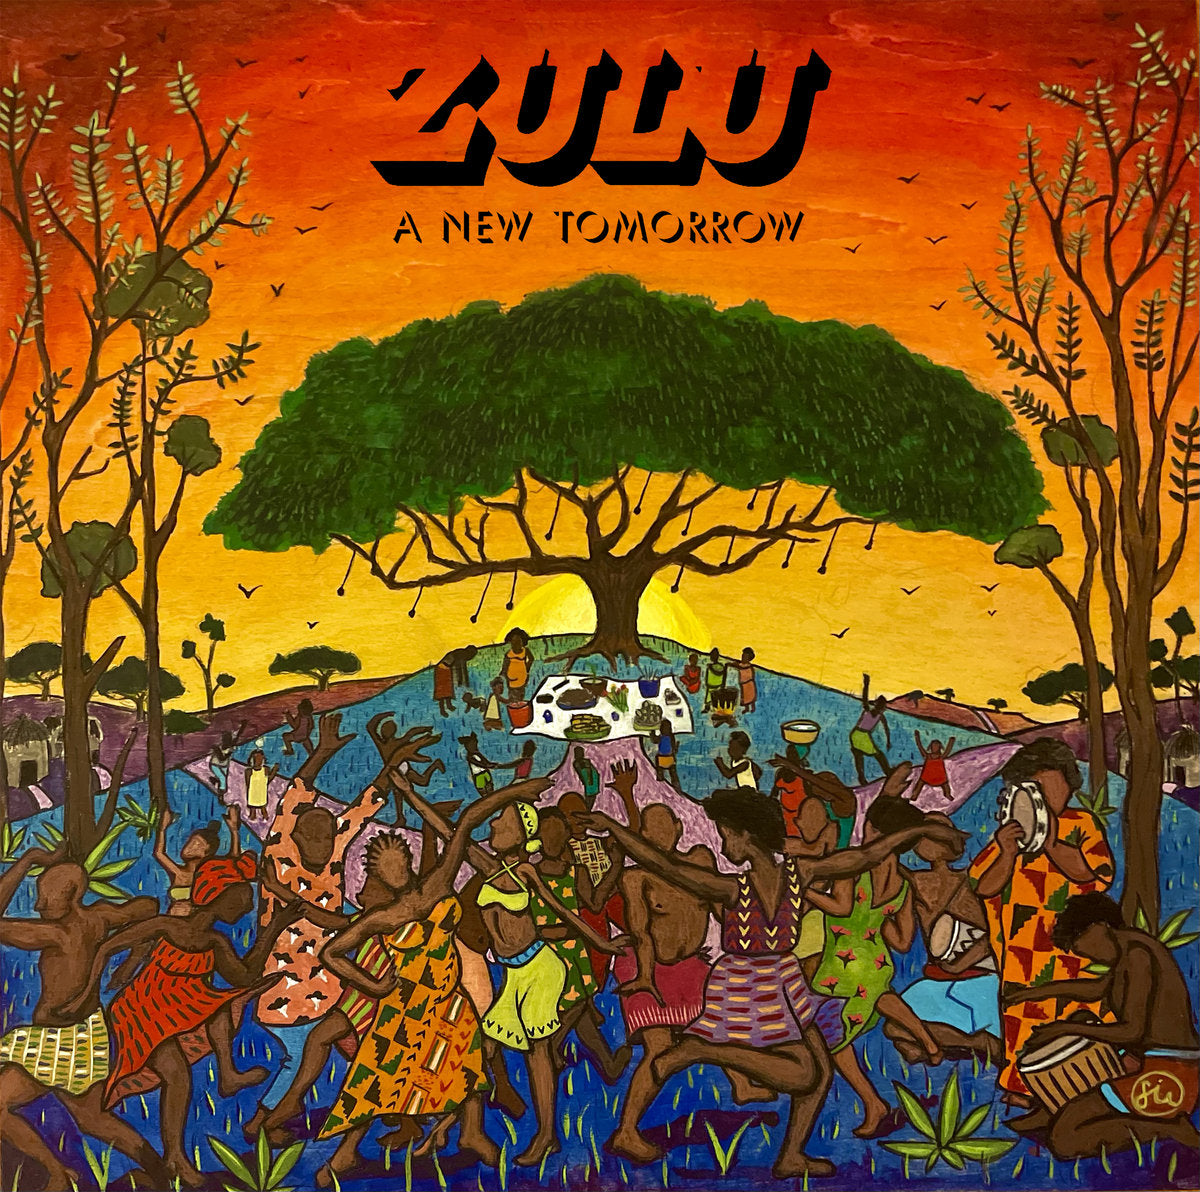 Zulu "A New Tomorrow" Cassette